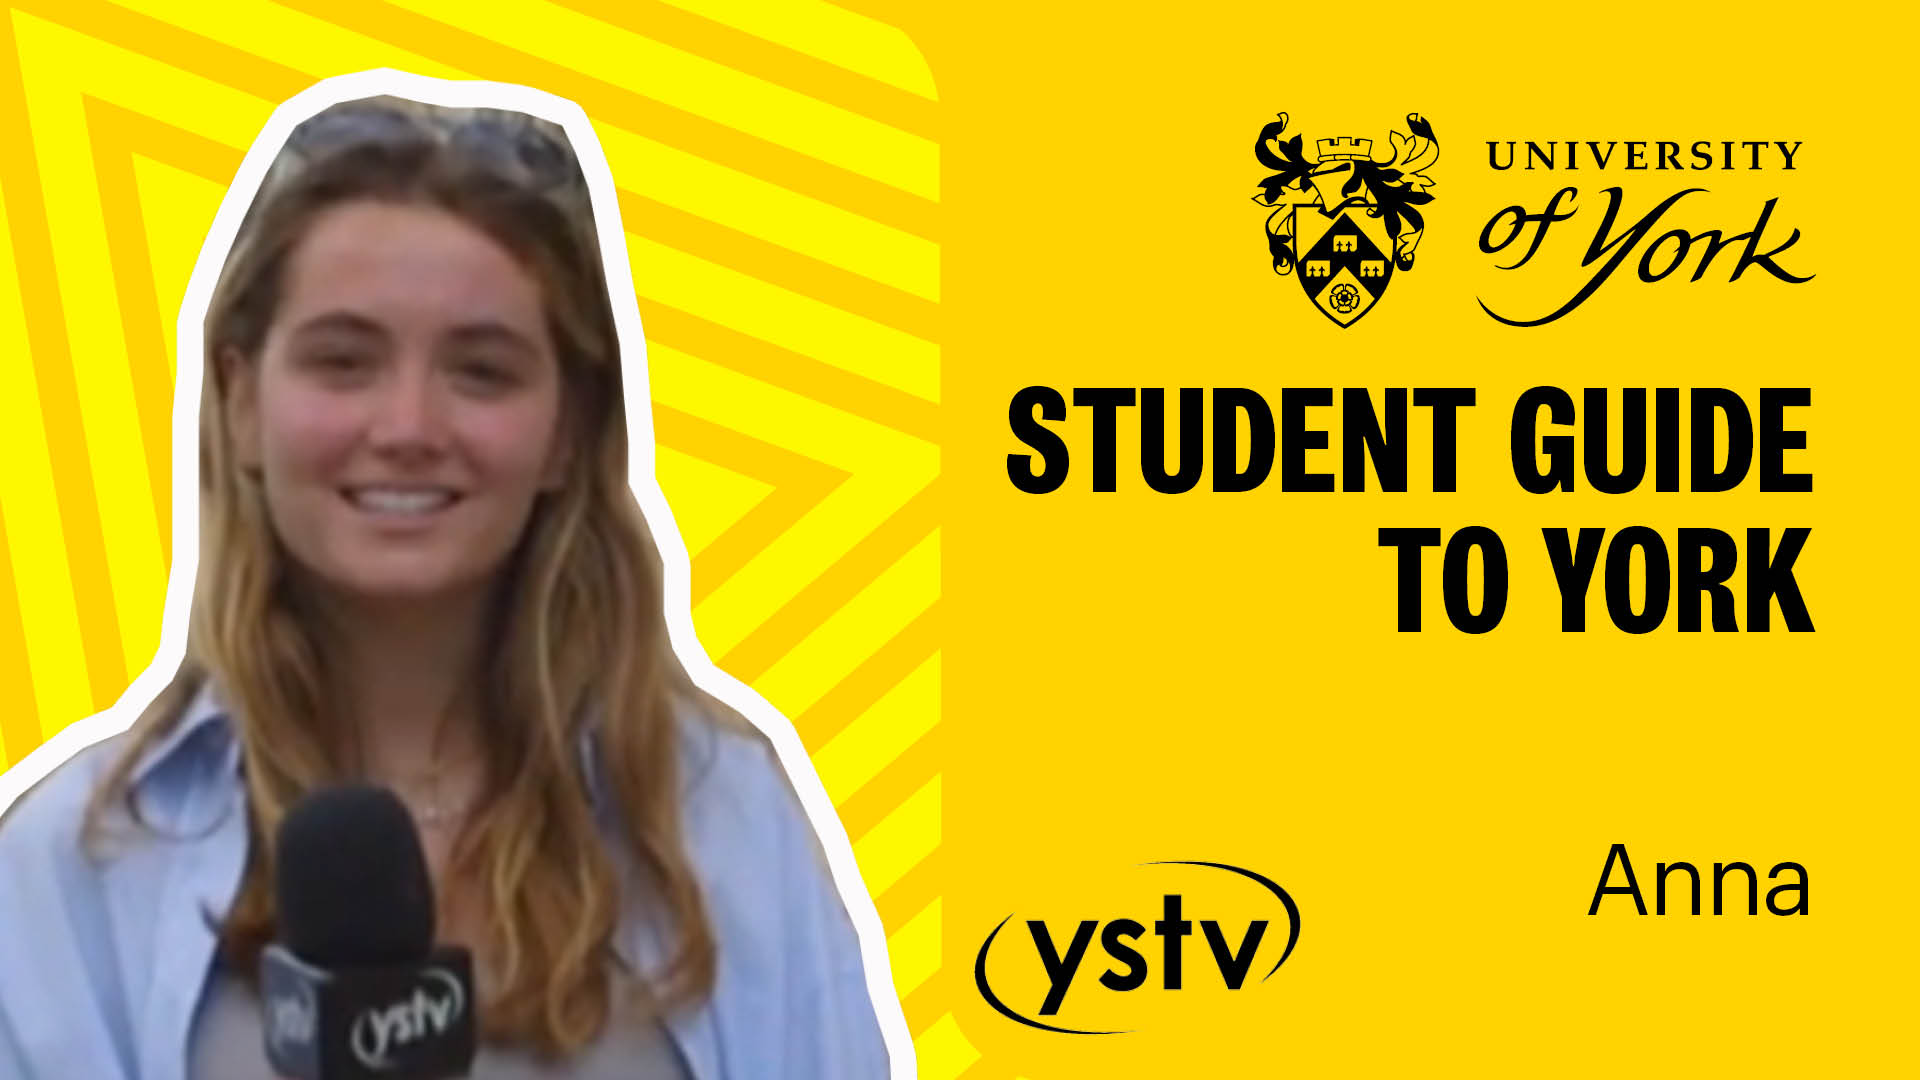 York city guide - Student life, University of York